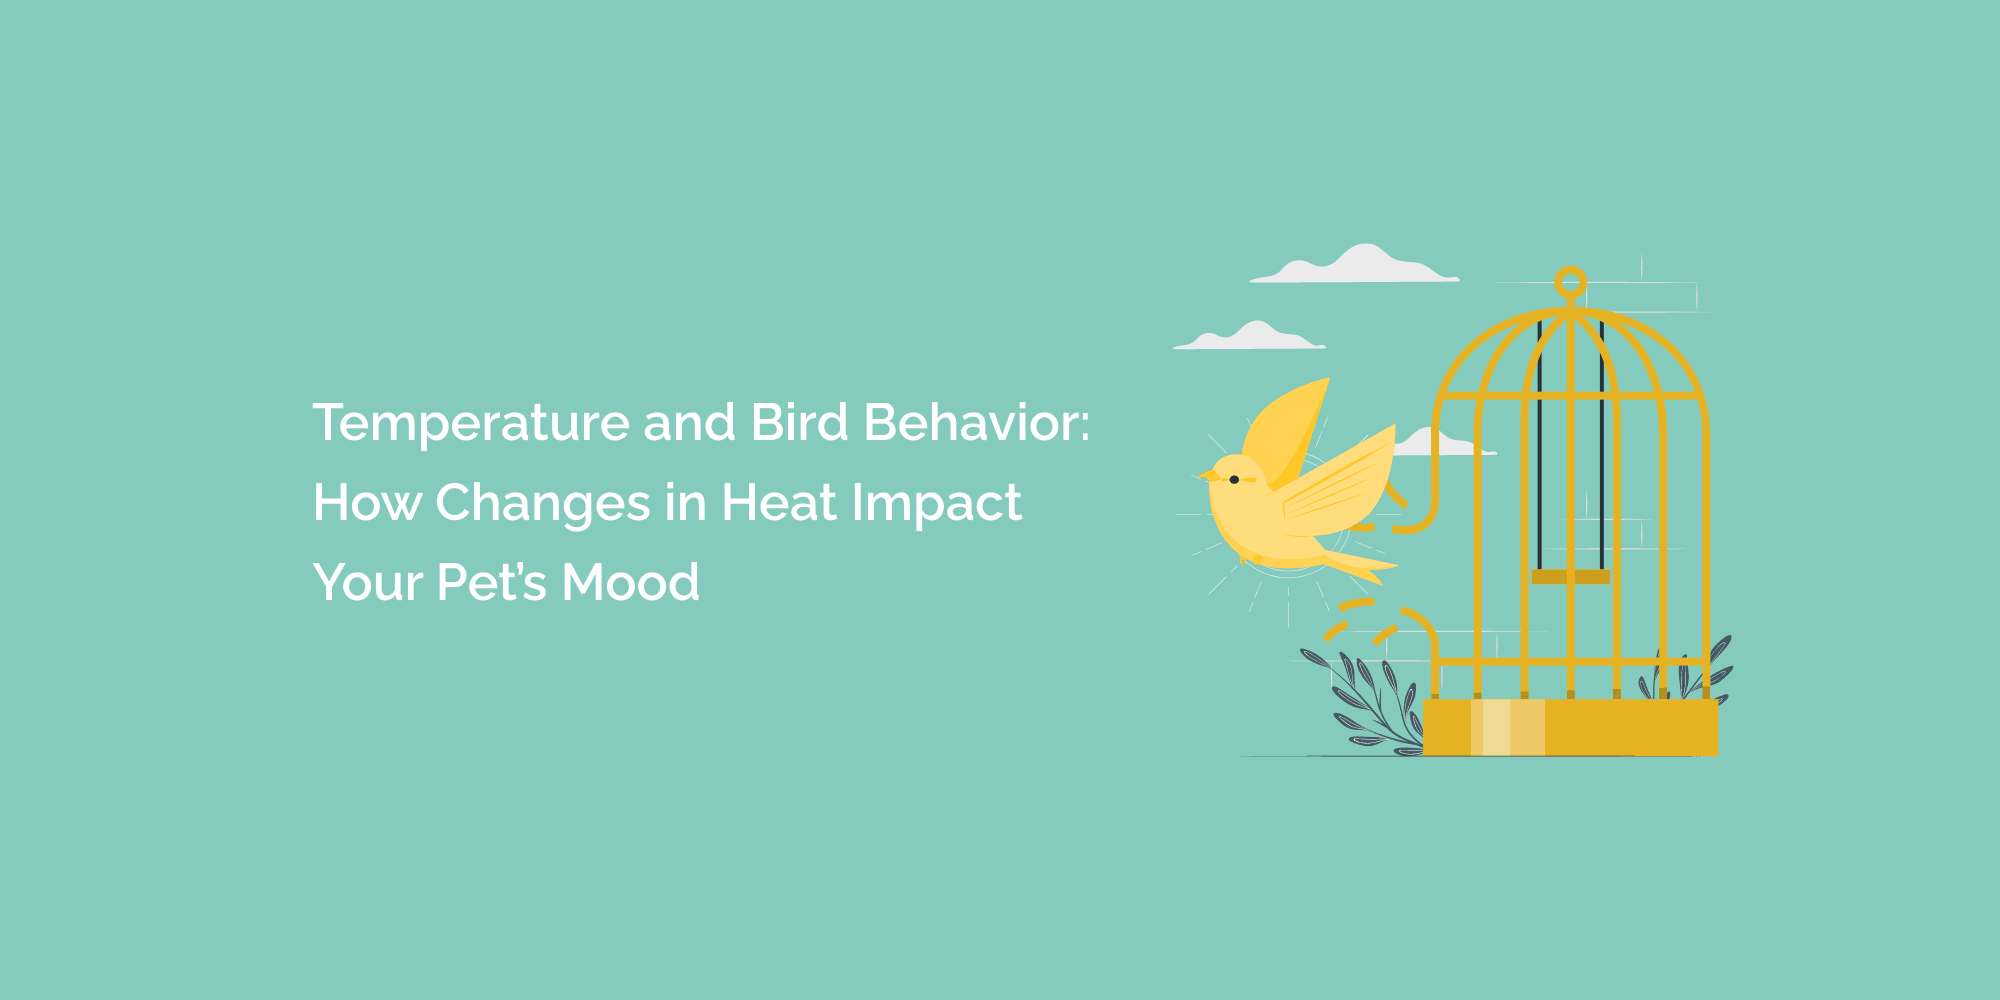 Temperature and Bird Behavior: How Changes in Heat Impact Your Pet's Mood